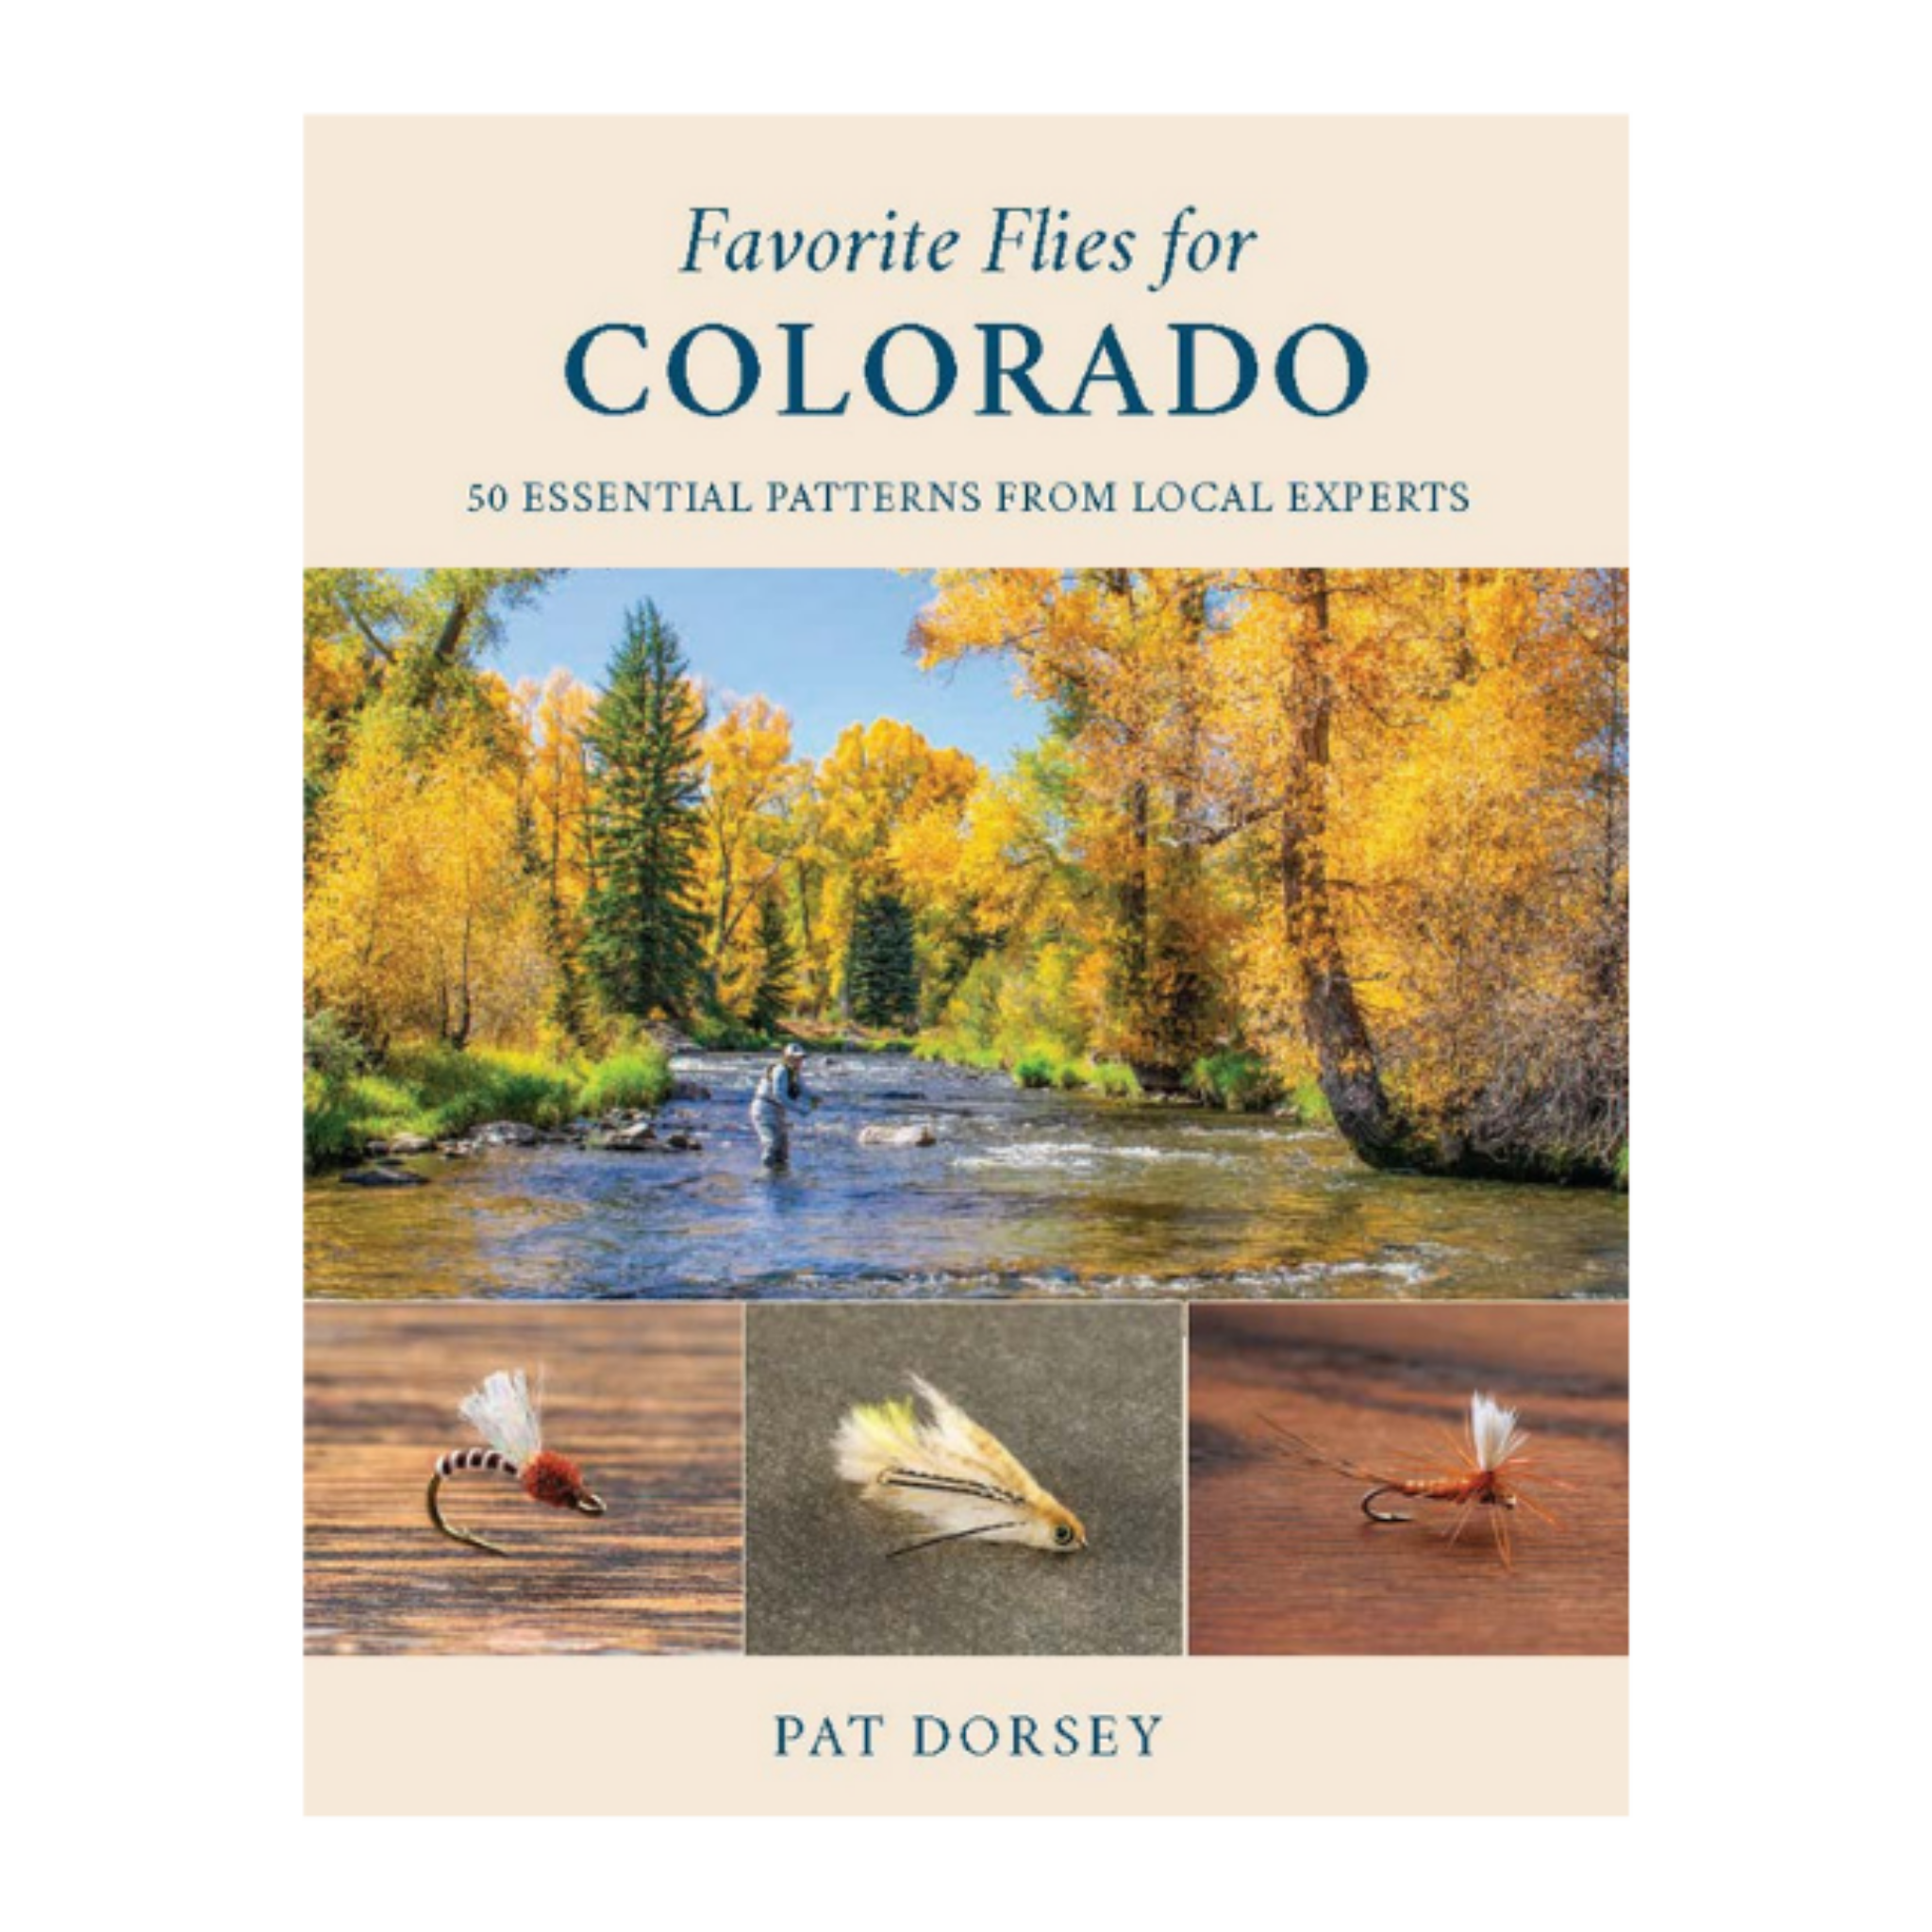 Favorite Flies for Colorado - (Pat Dorsey)